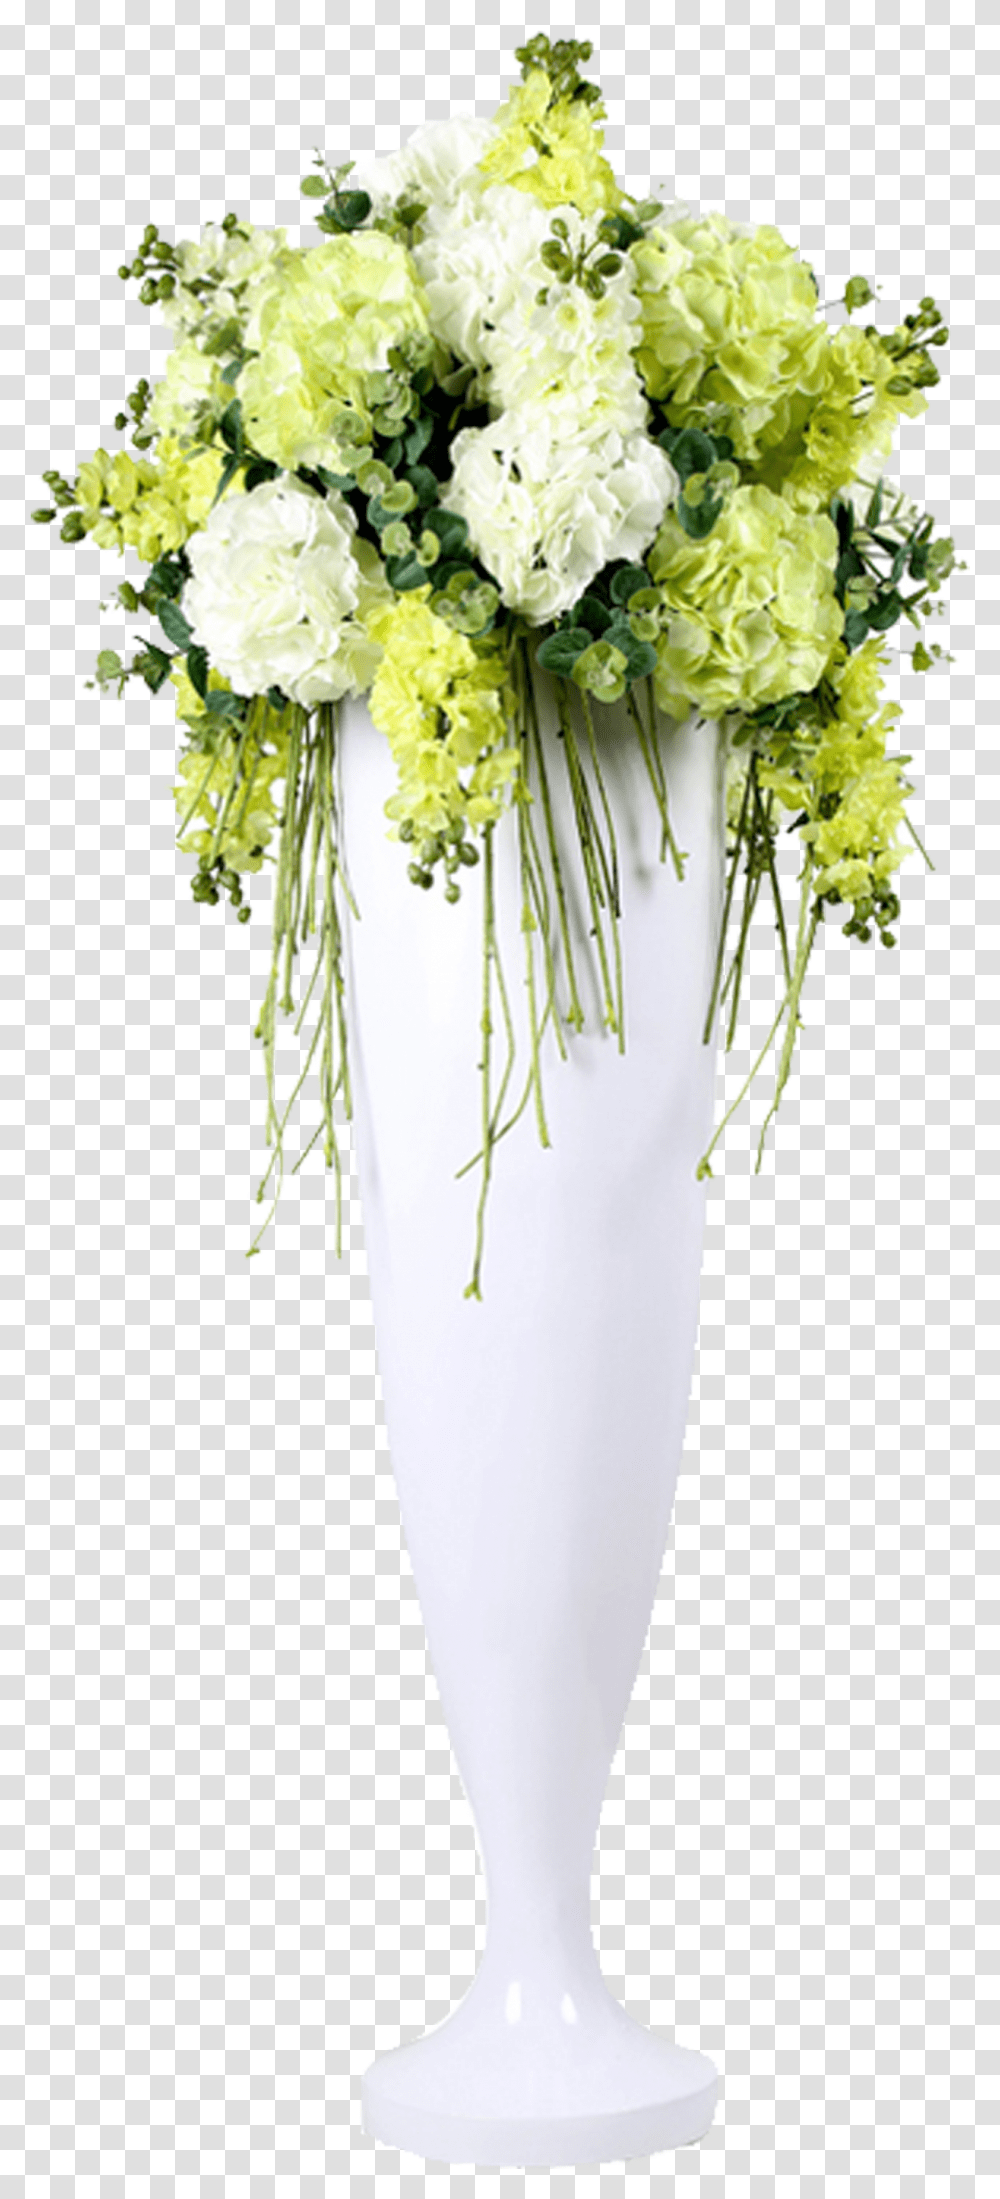 Flower Bouquet Clipart Flower In Vase, Plant, Blossom, Flower Arrangement, Floral Design Transparent Png